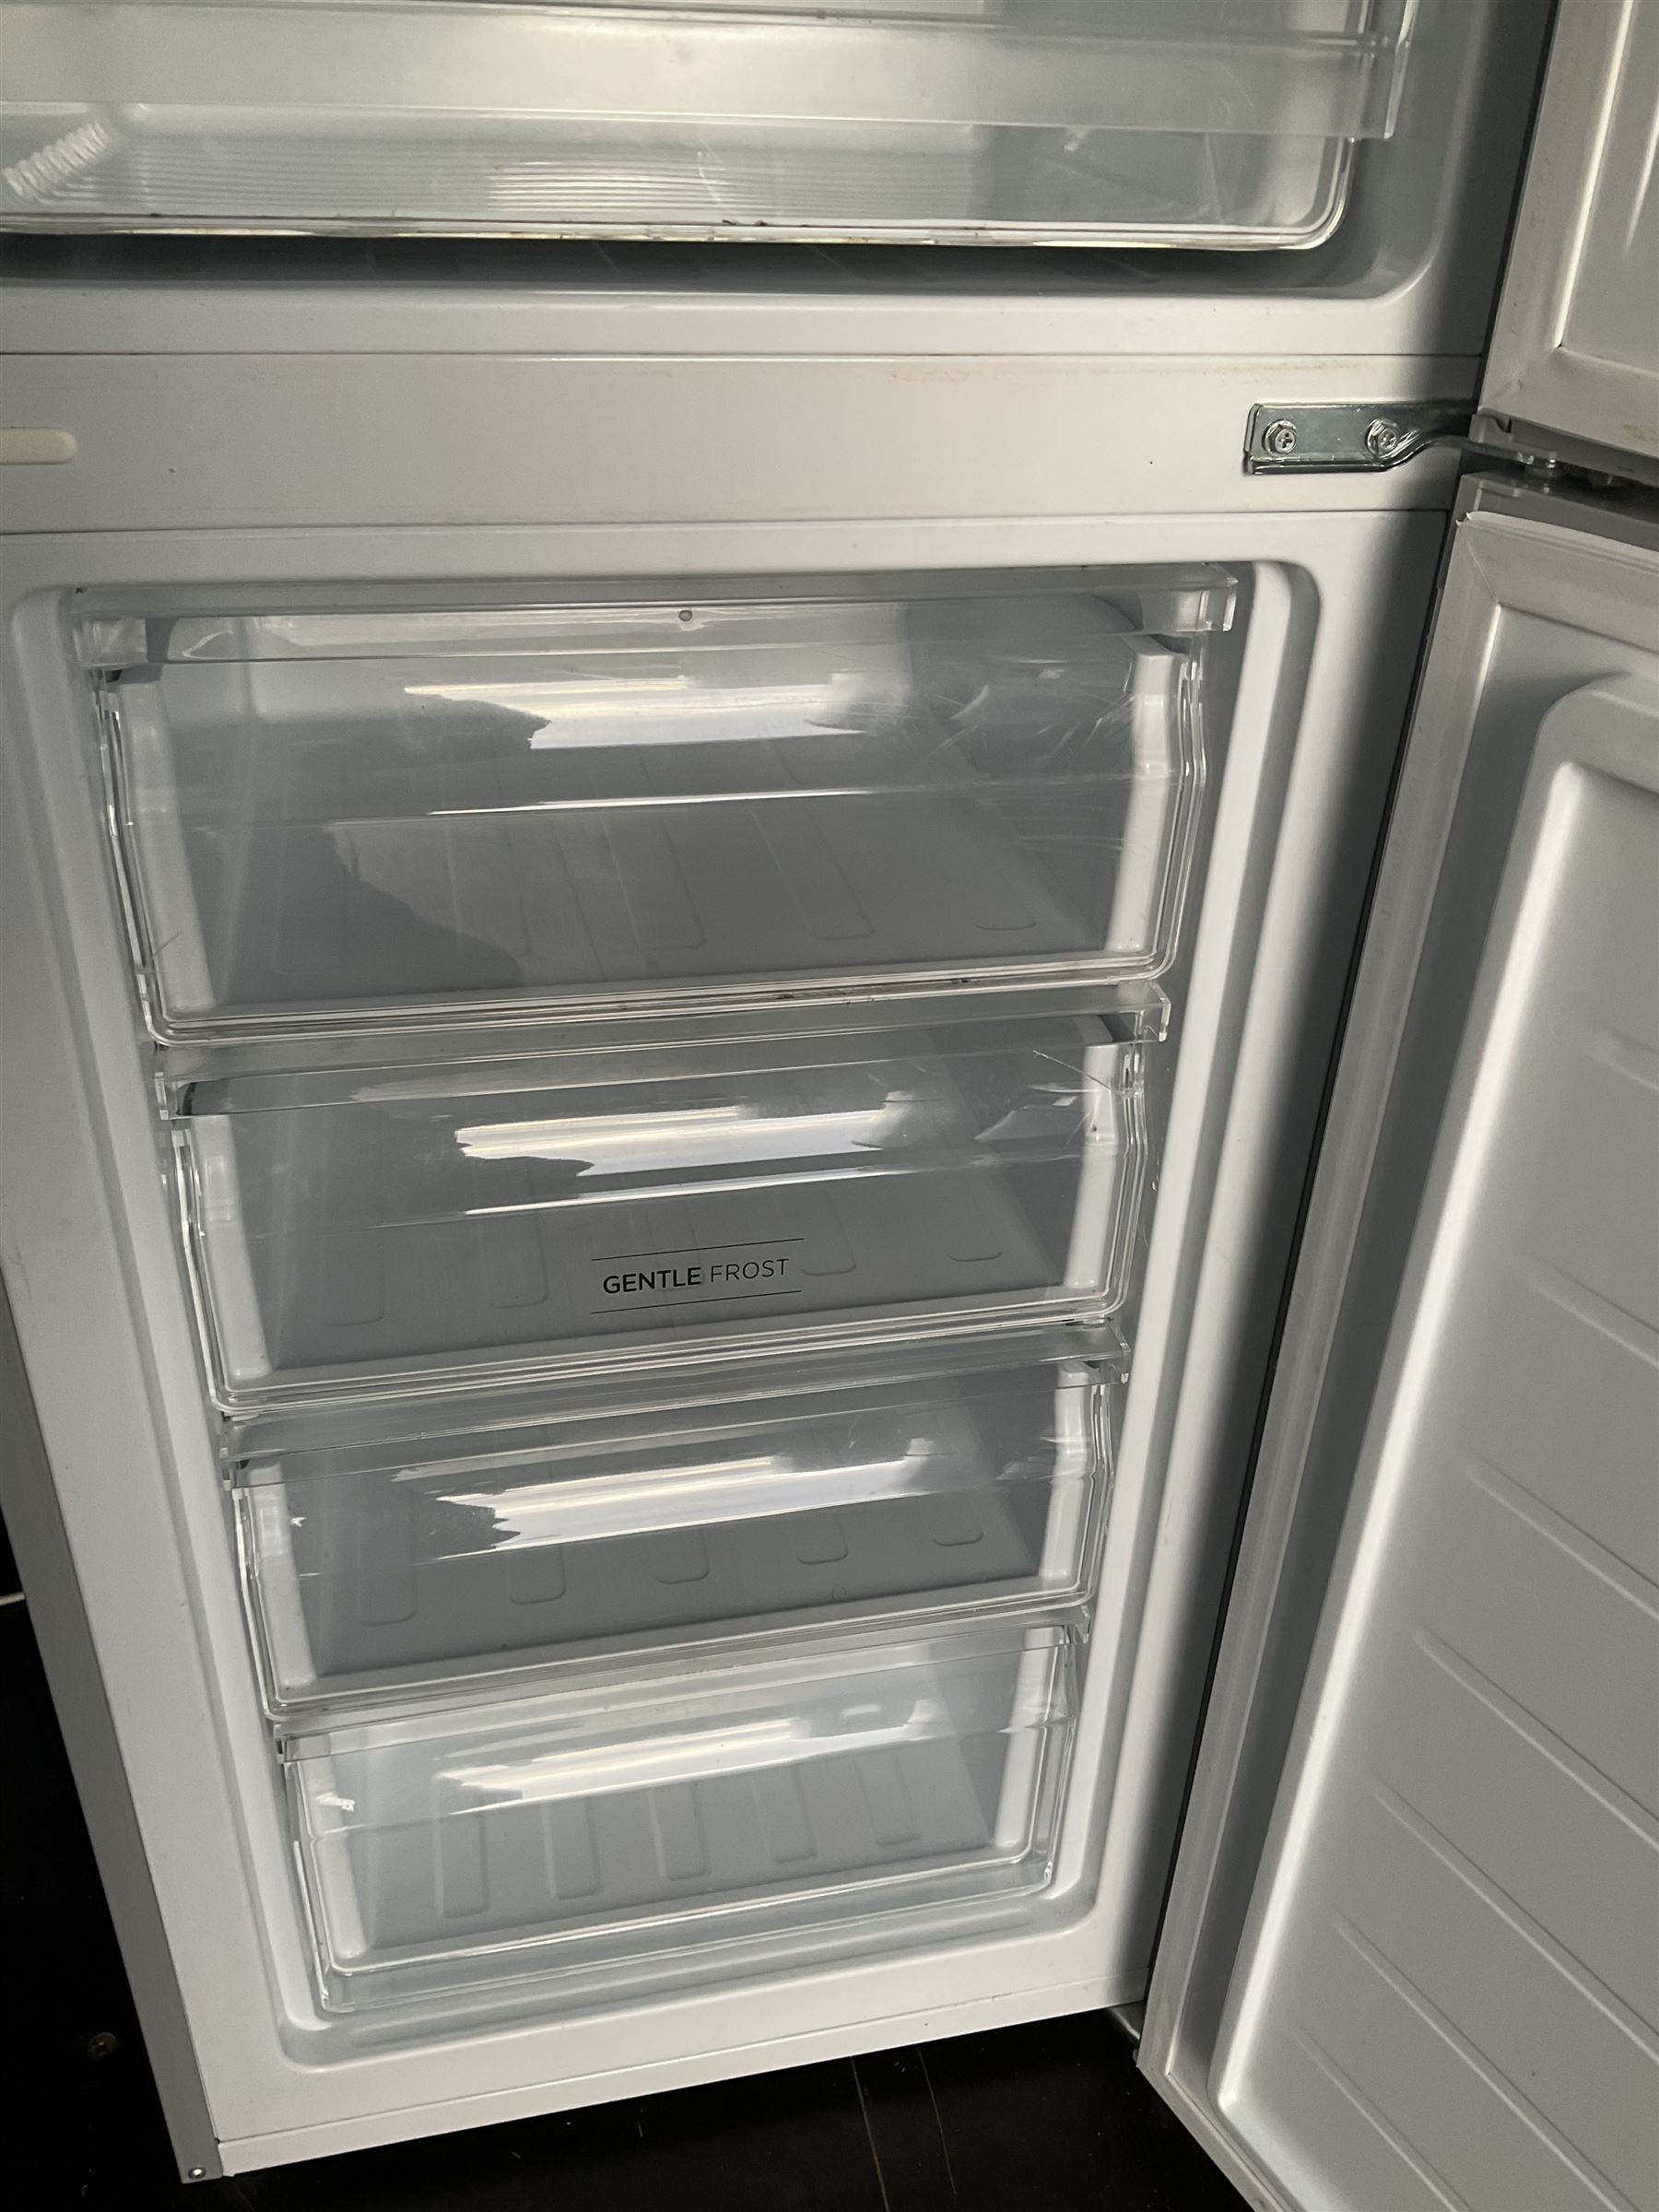 Hoover fridge freezer with water dispenser - Image 3 of 3